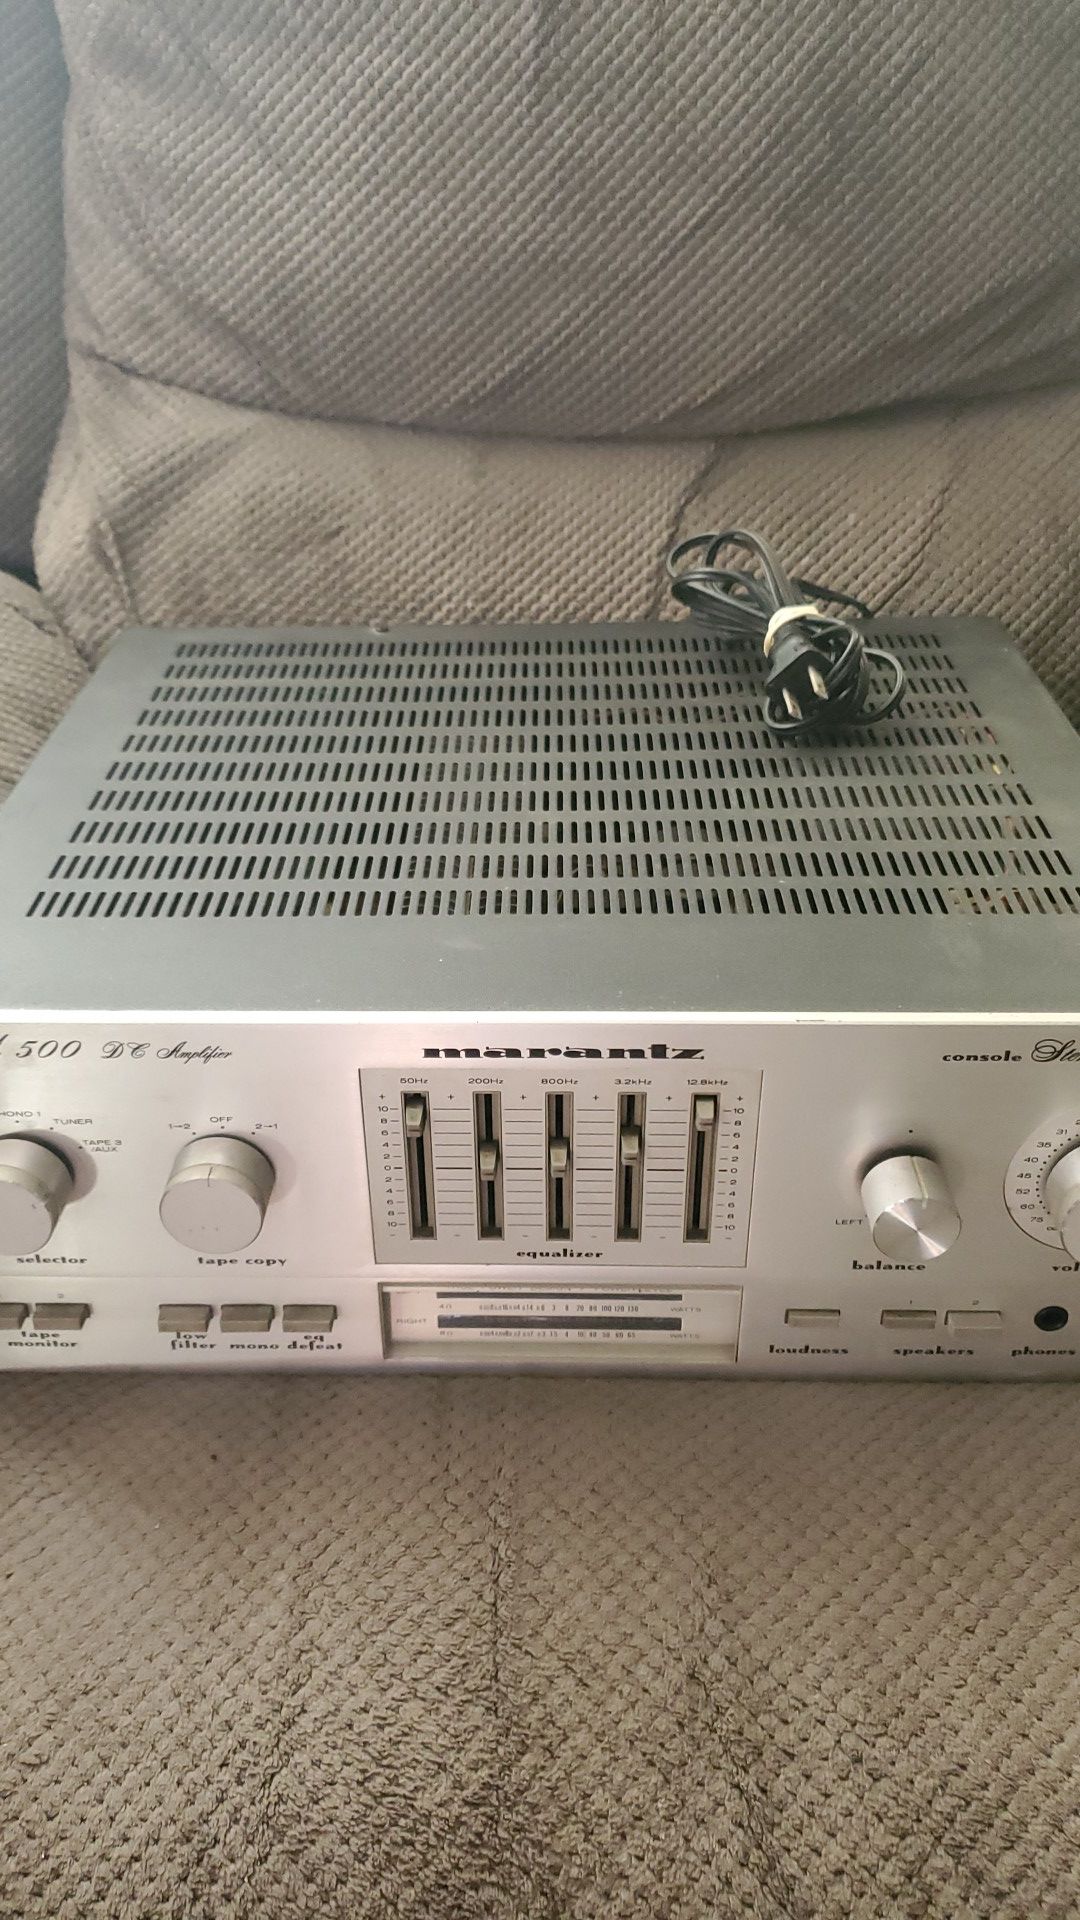 Marantz vintage amplifier